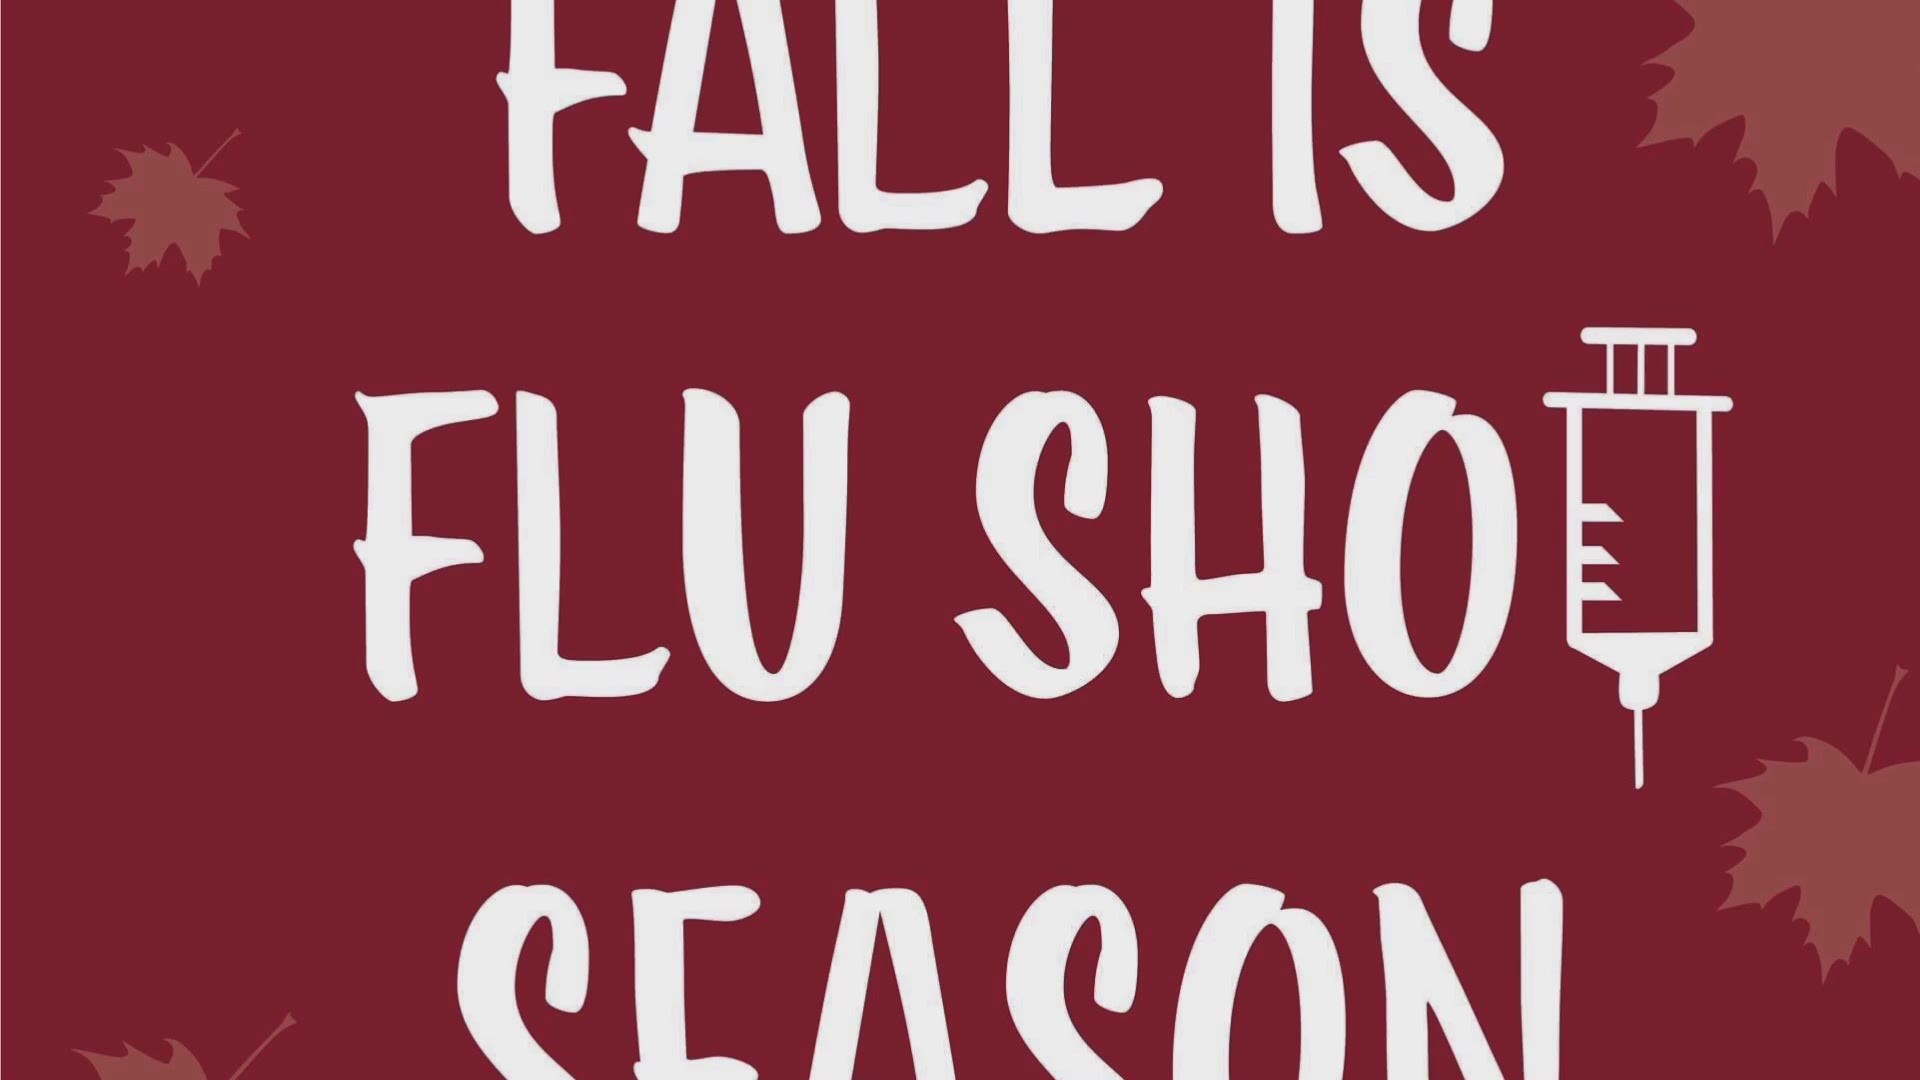 Remember, fall is flu shot season.